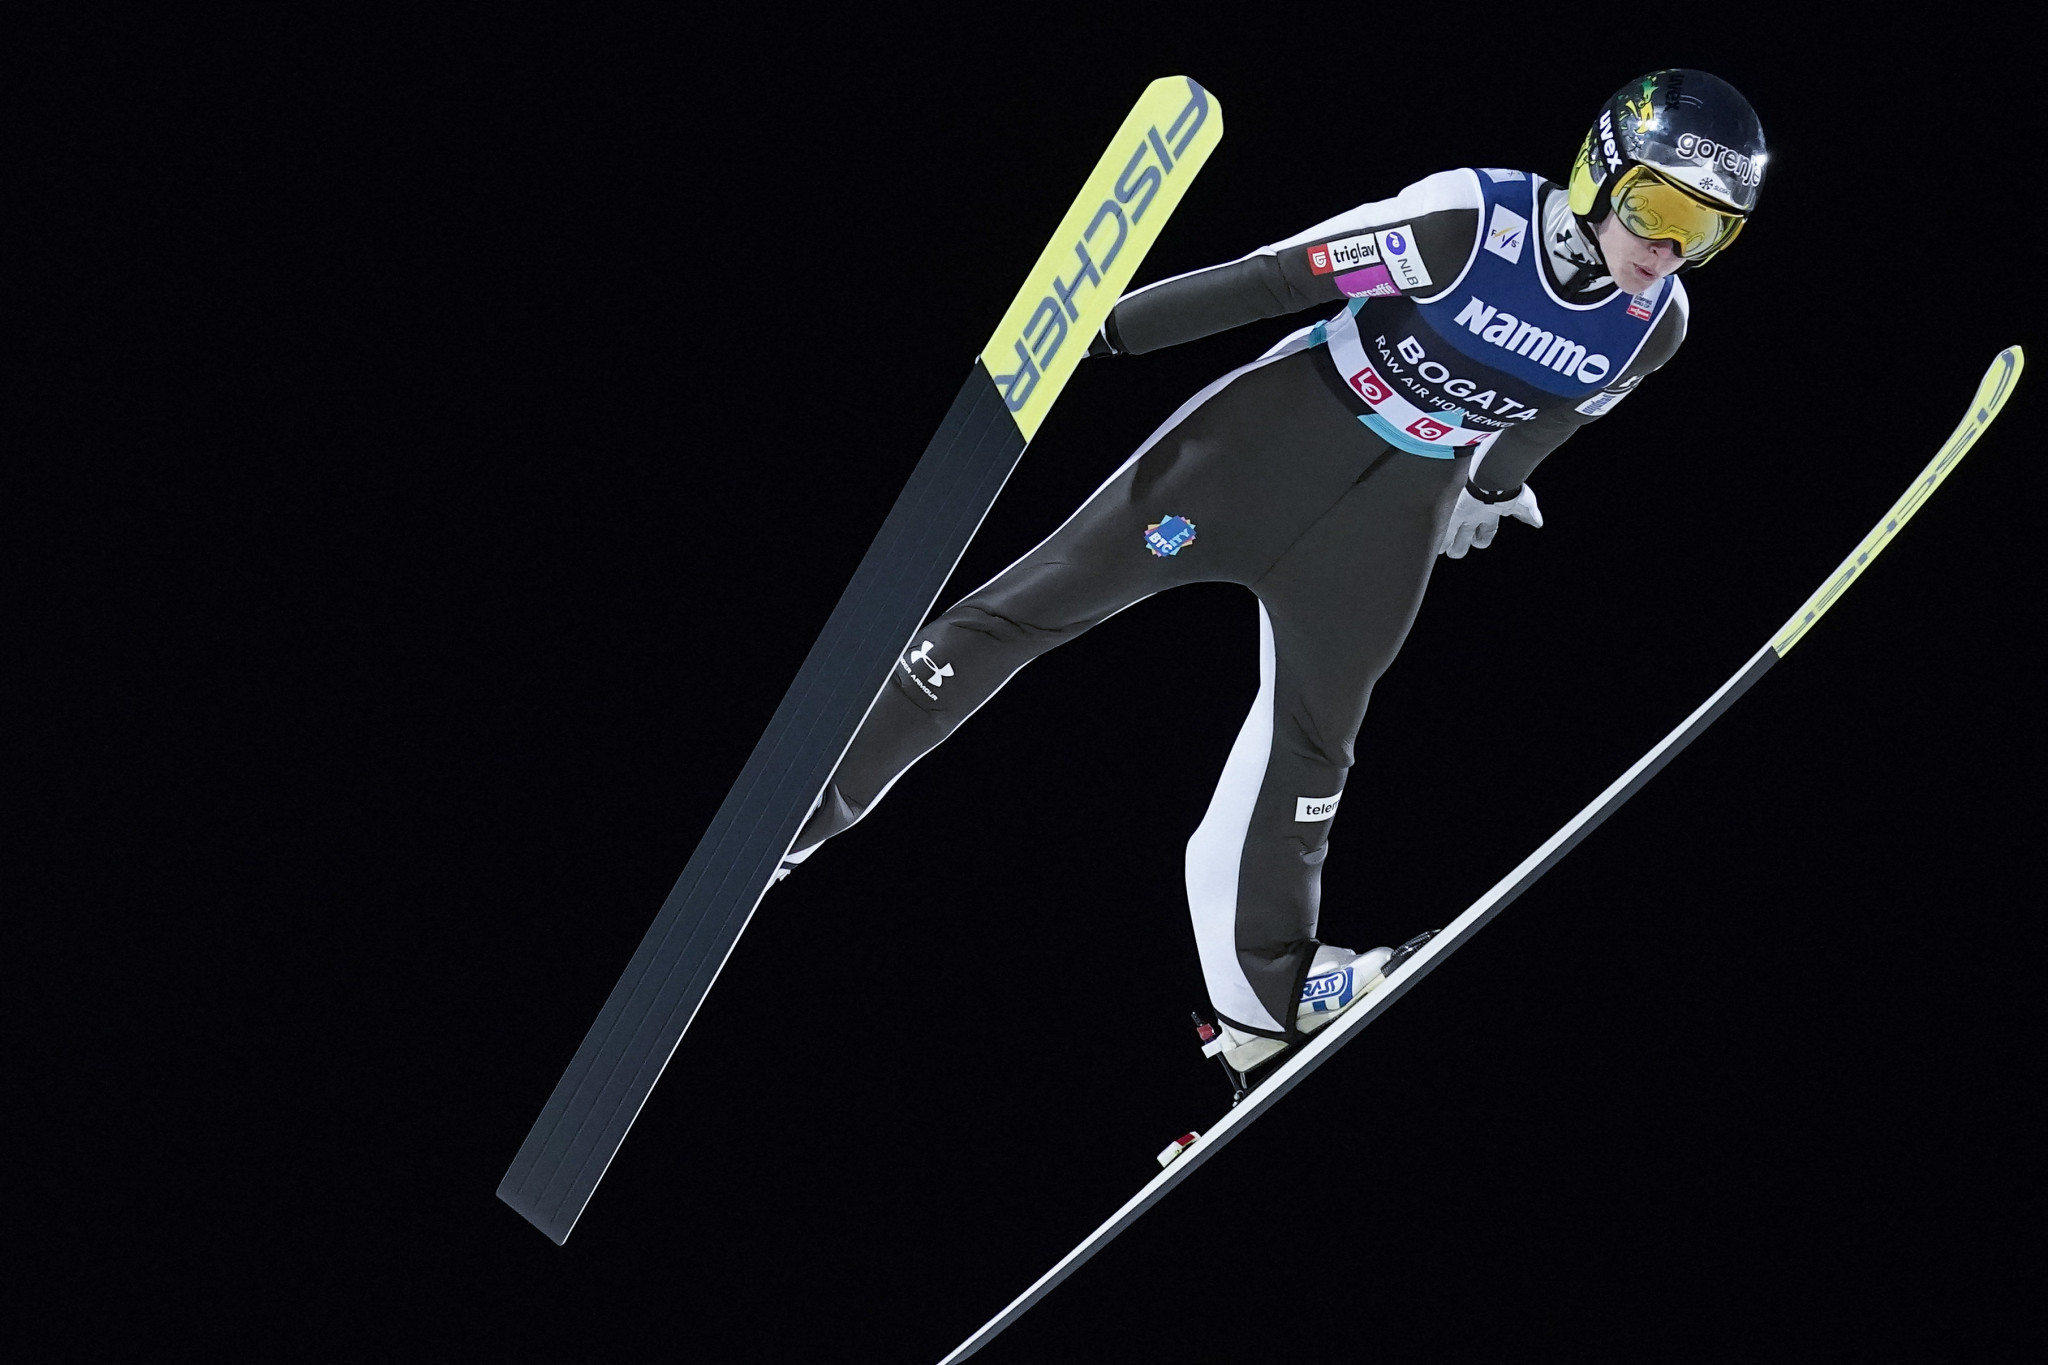 Bogataj leads qualification at Ski Jumping World Cup in Oberhof